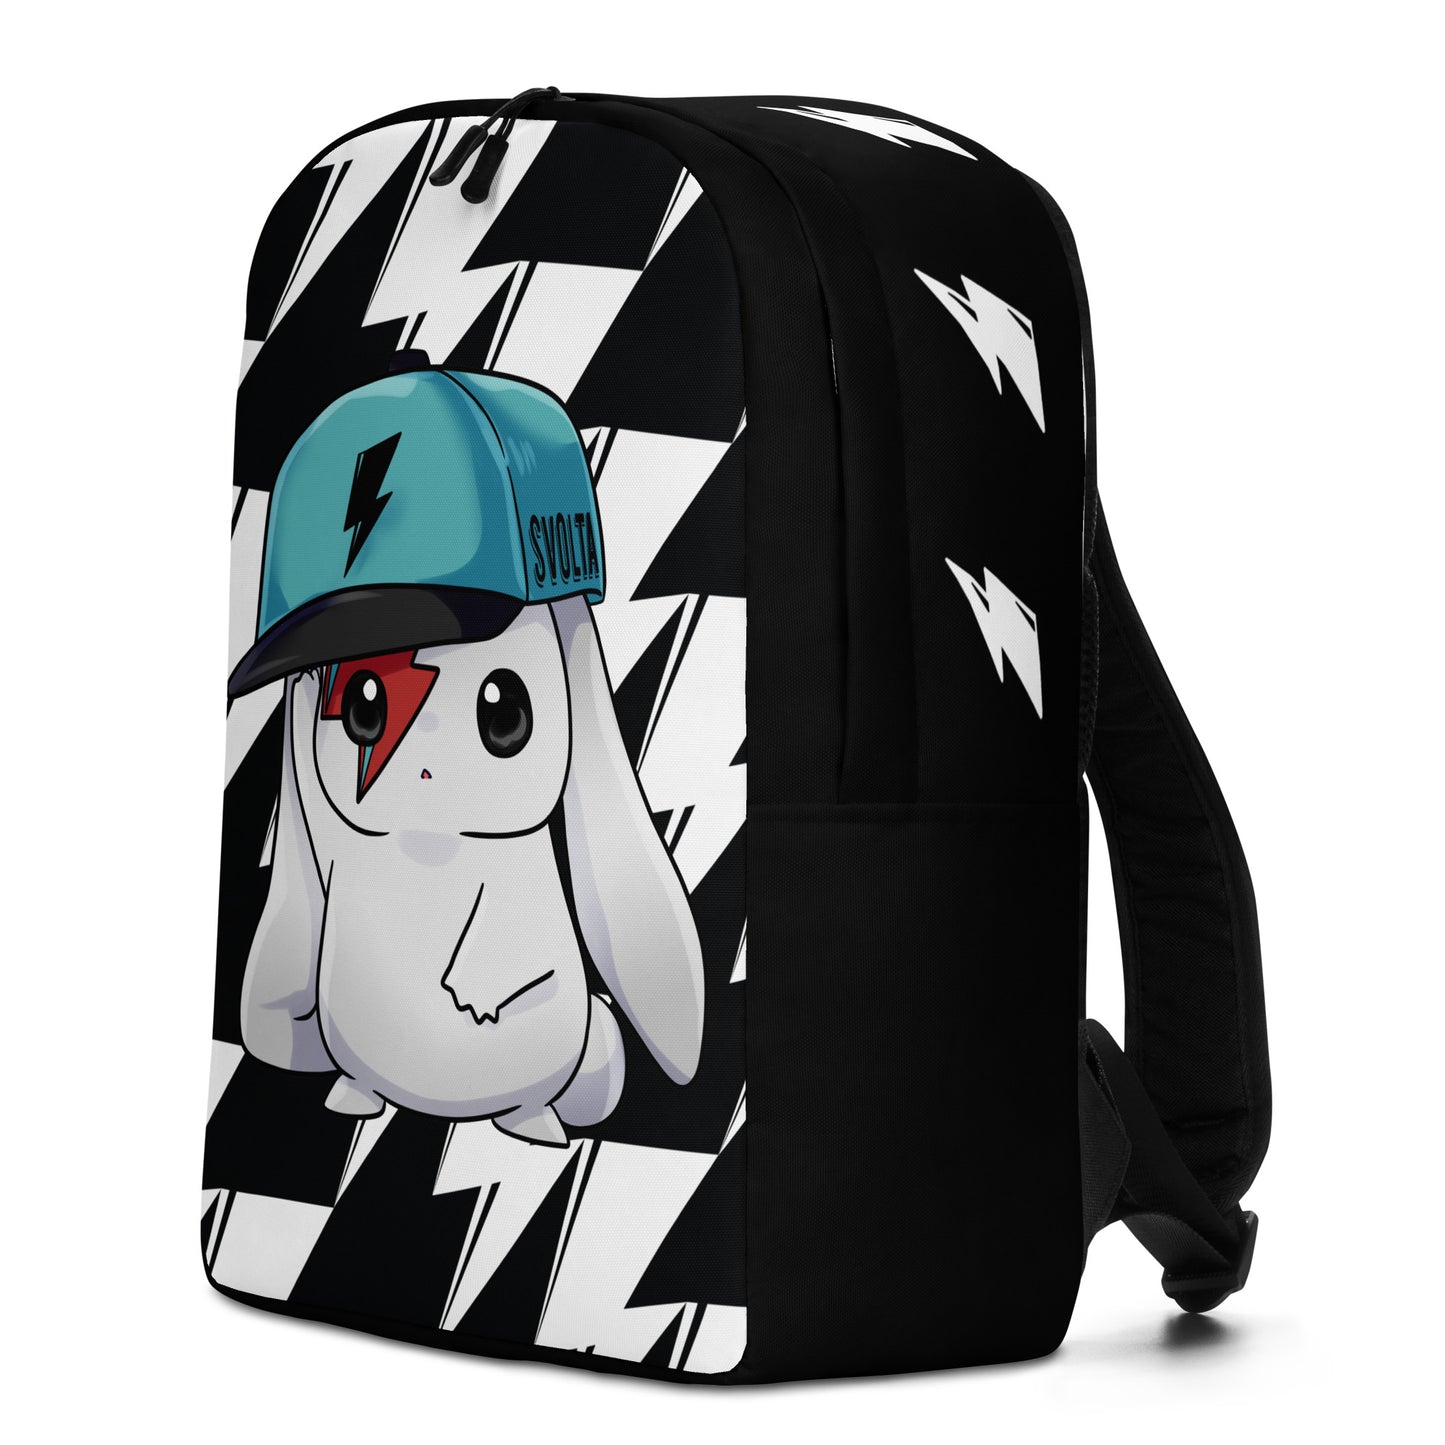 SVOLTA Bolt Print Backpack featuring Rebel Chibi